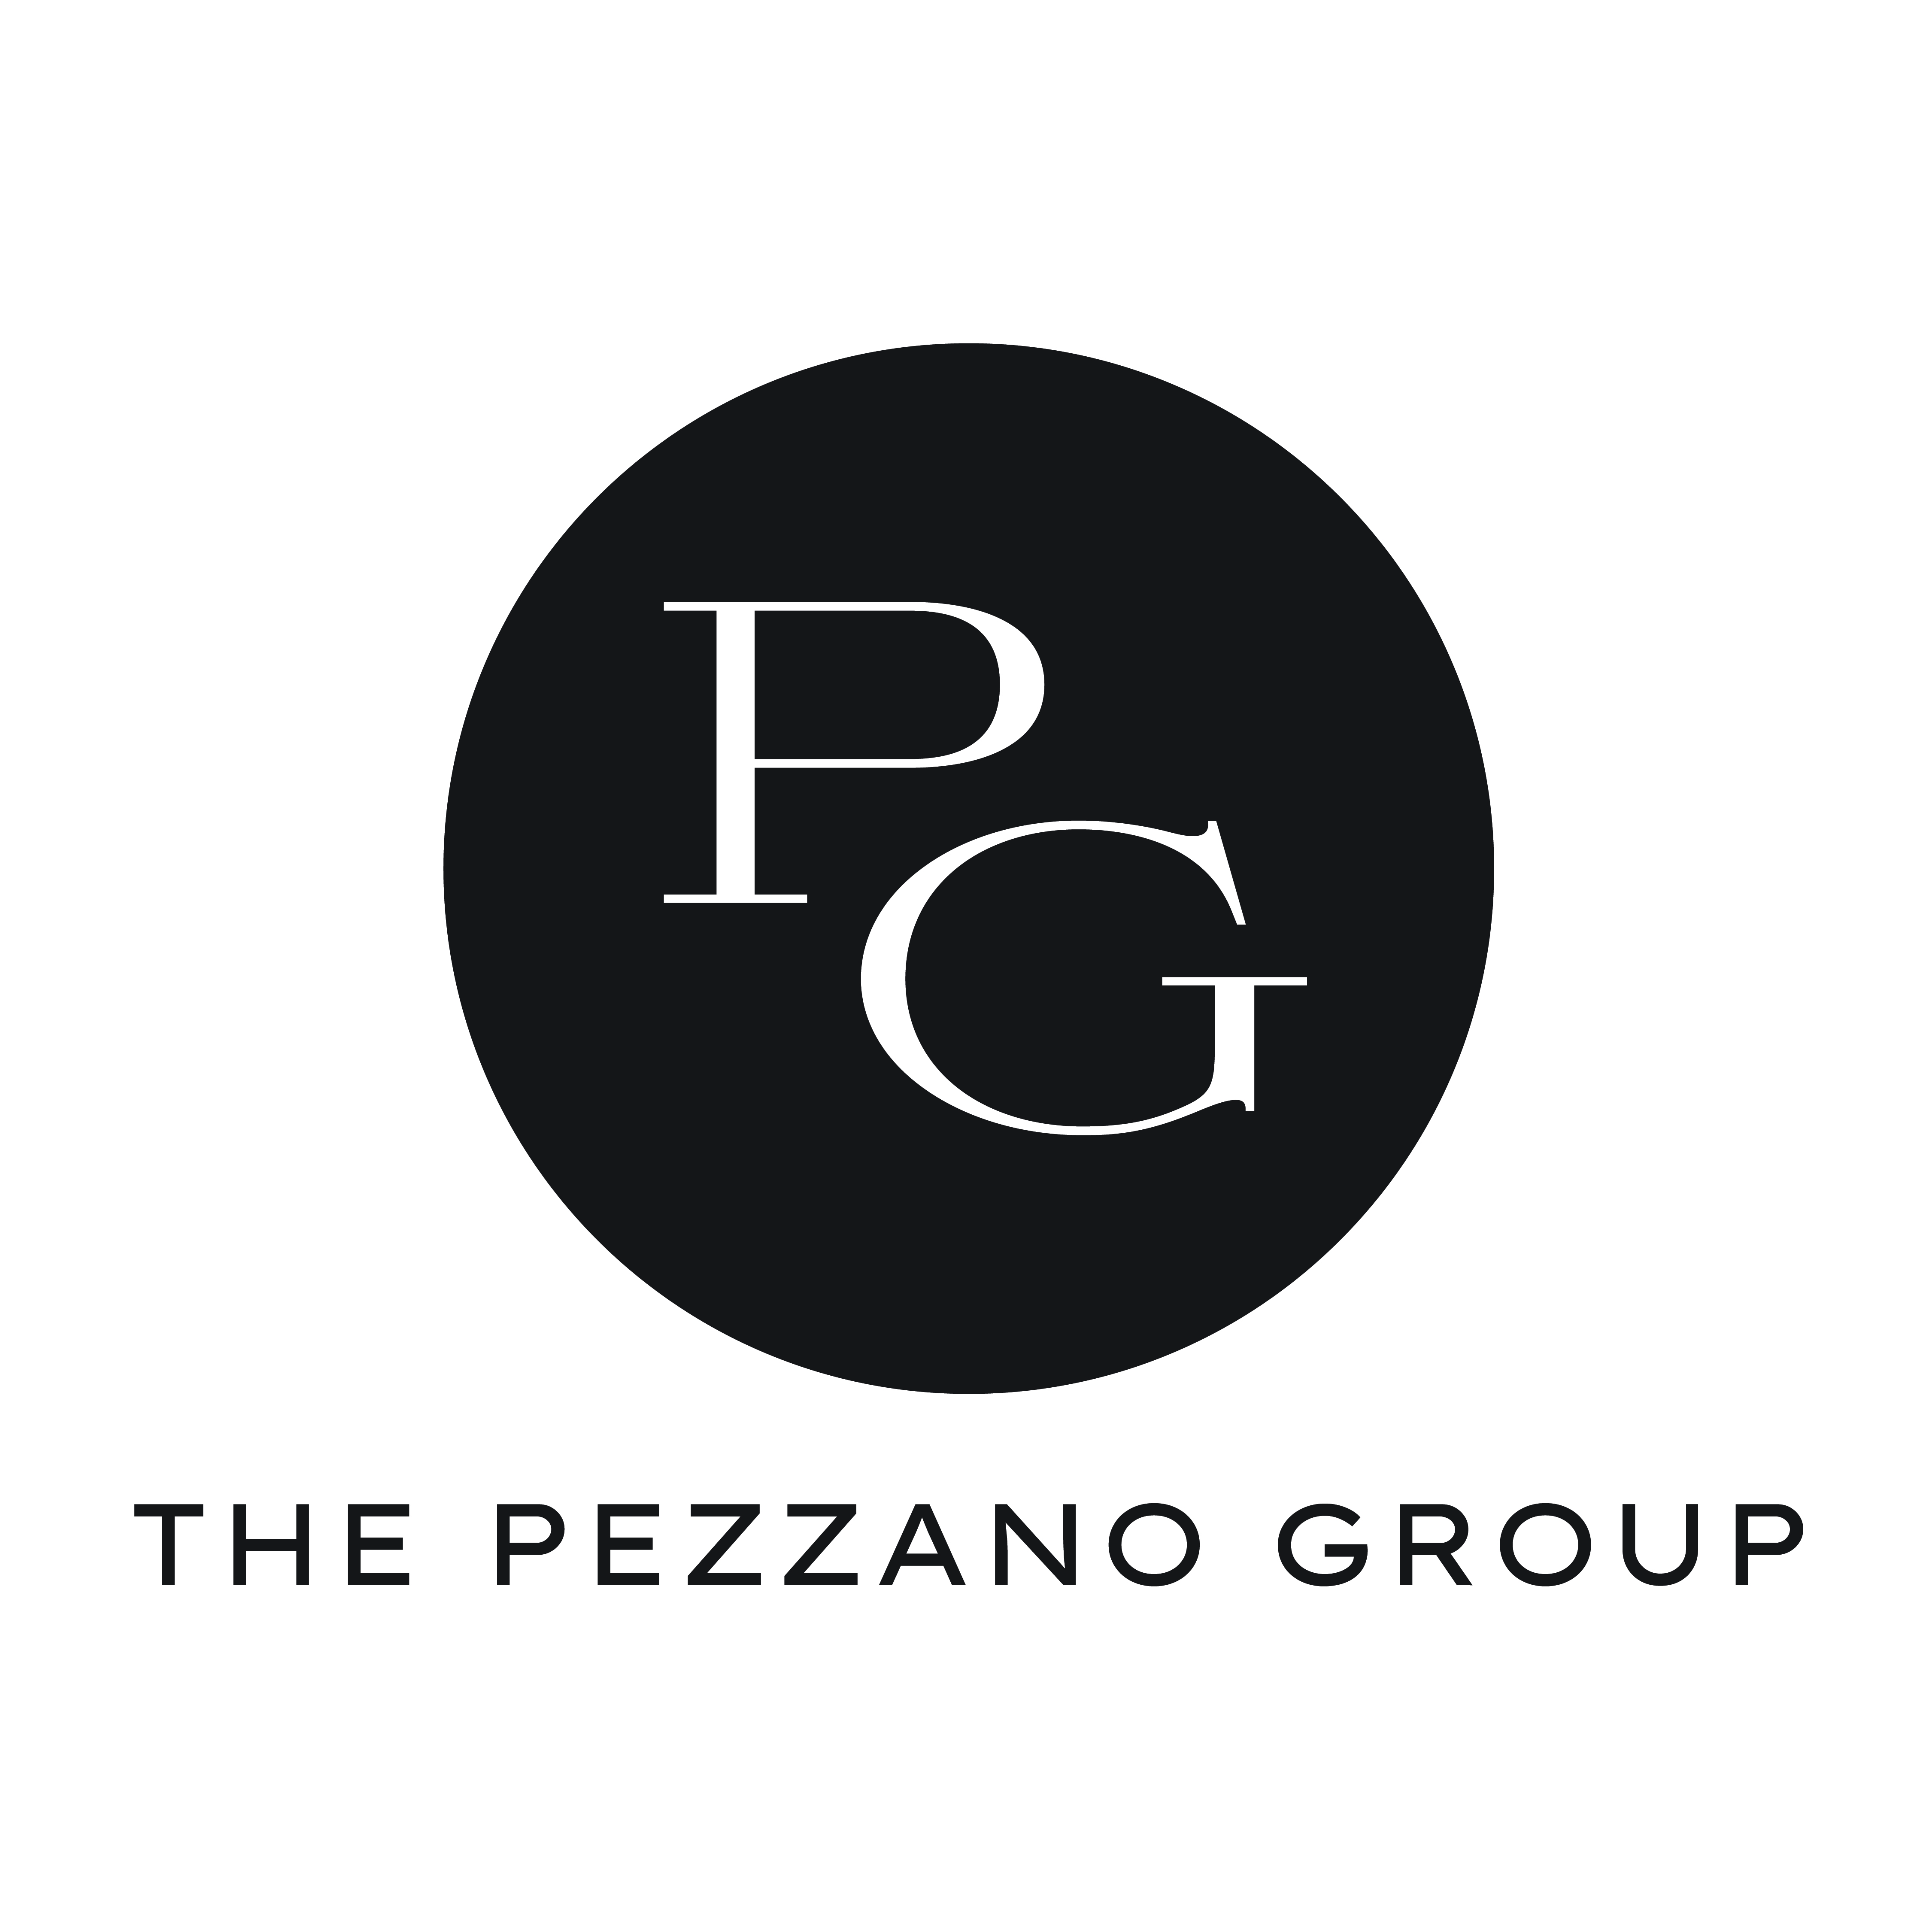 The Pezzano Group